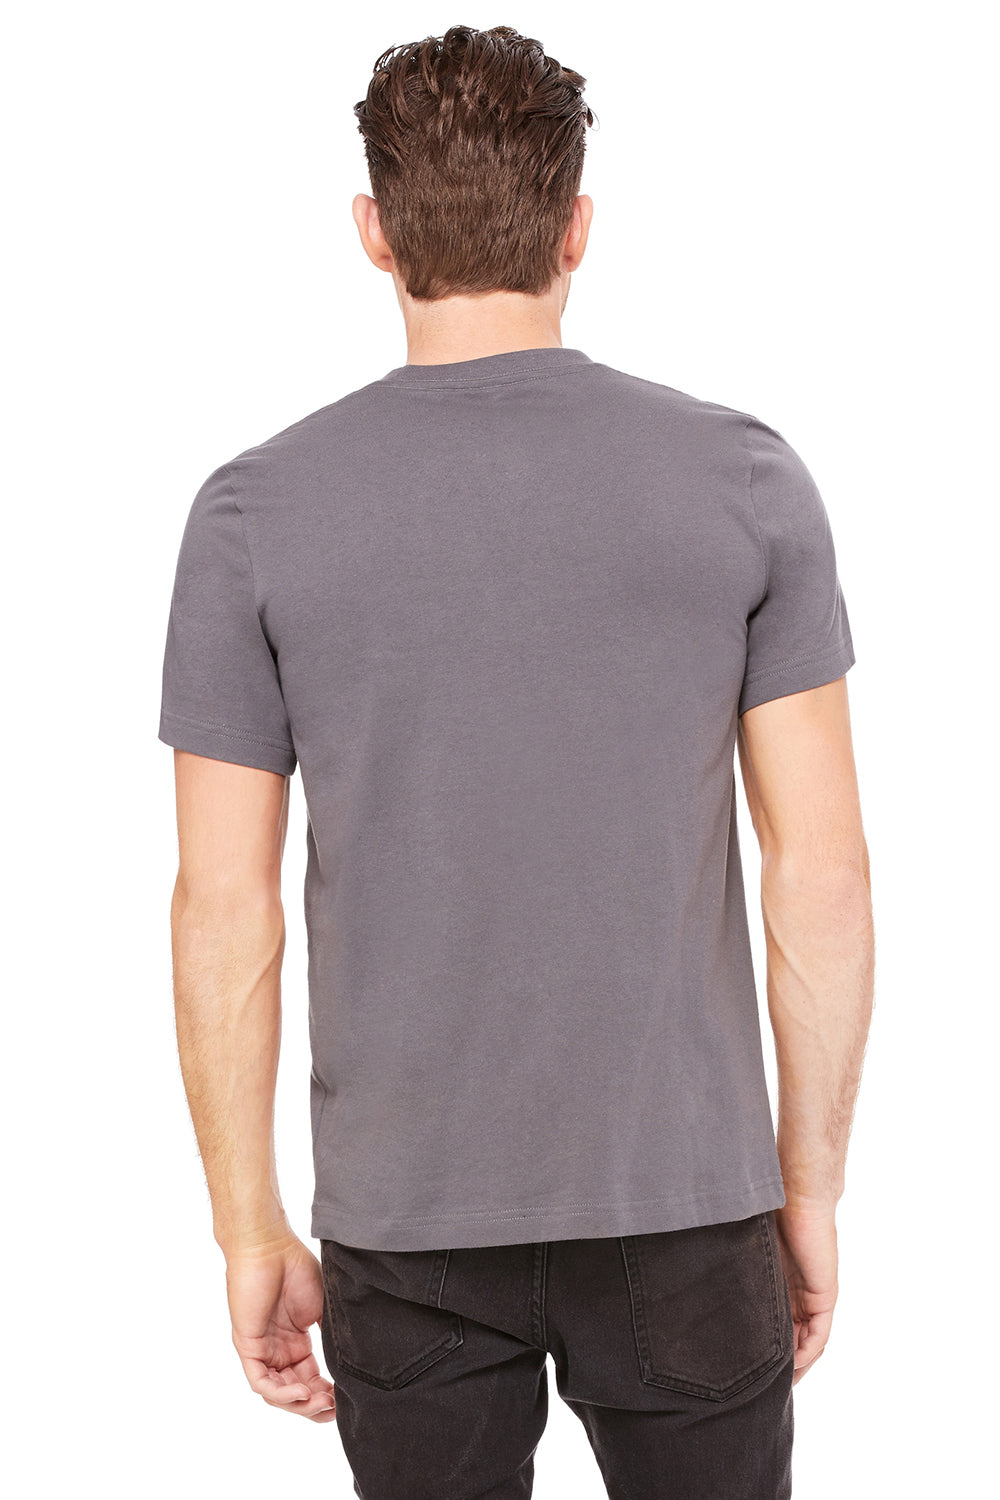 Bella + Canvas 3091 Mens Short Sleeve Crewneck T-Shirt Asphalt Grey Back